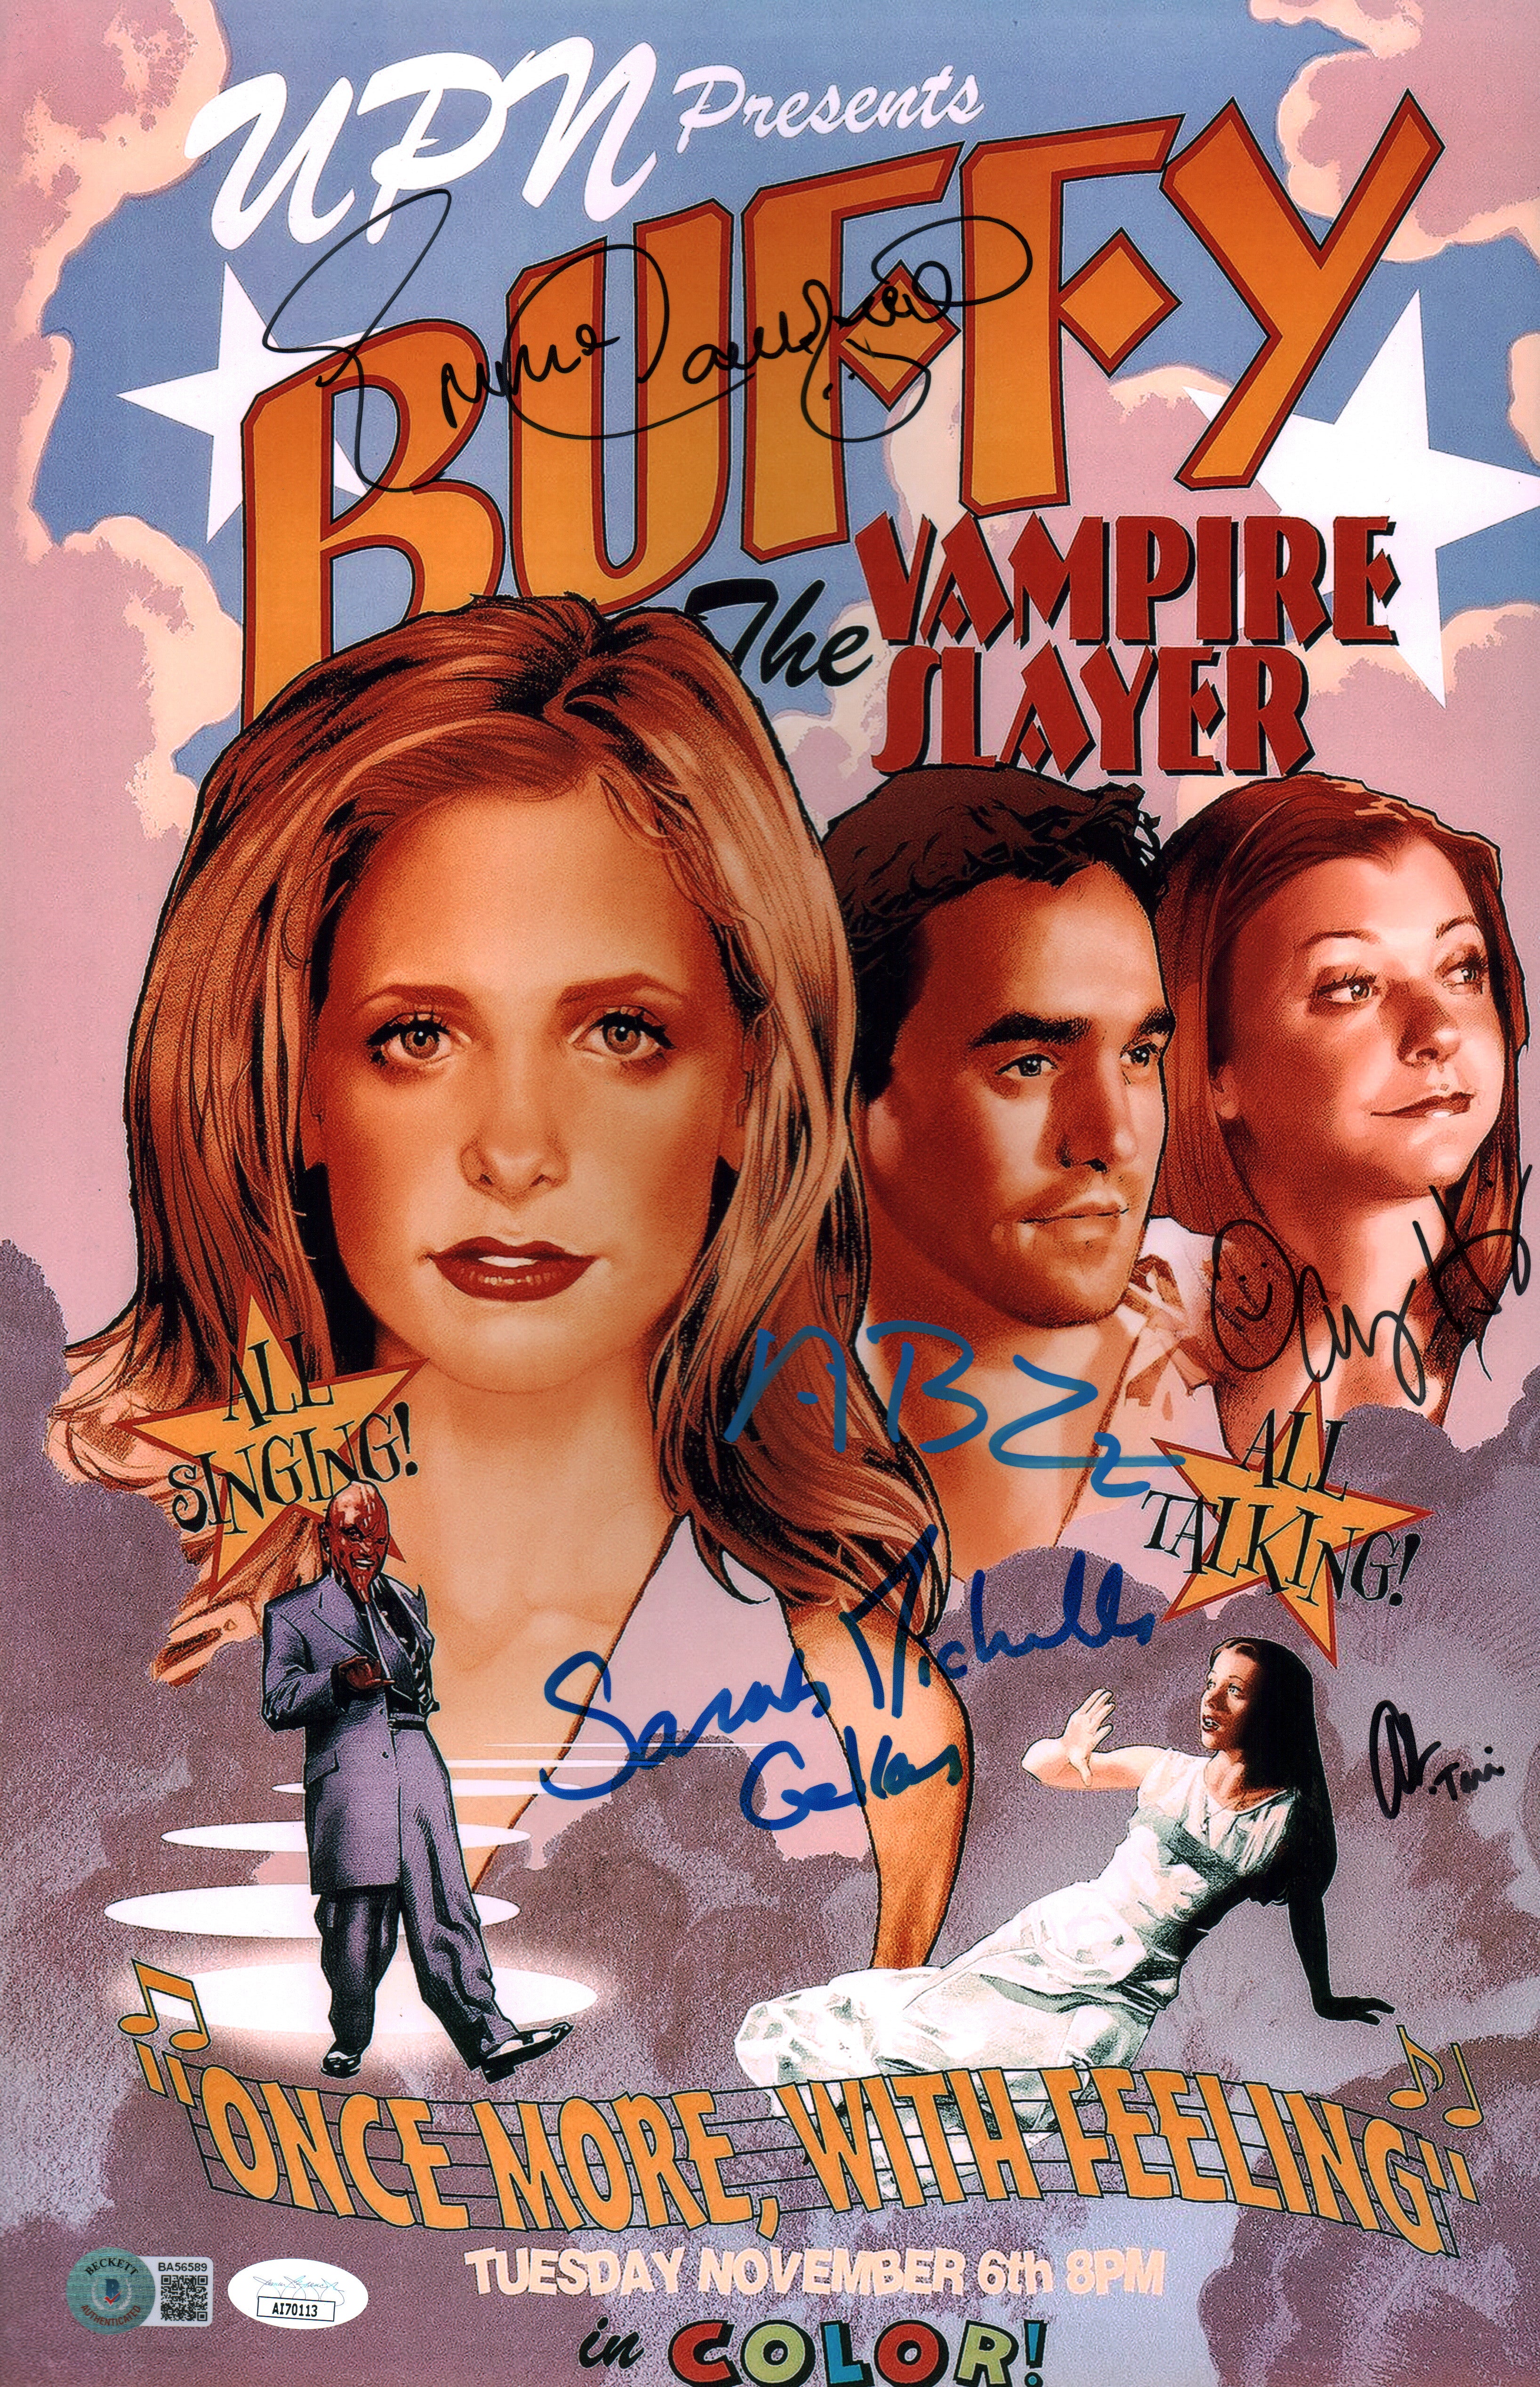 Buffy the Vampire Slayer 11x17 Photo Poster Cast x5 Signed Gellar Hannigan Caulfield Brendon Benson JSA Certified Autograph